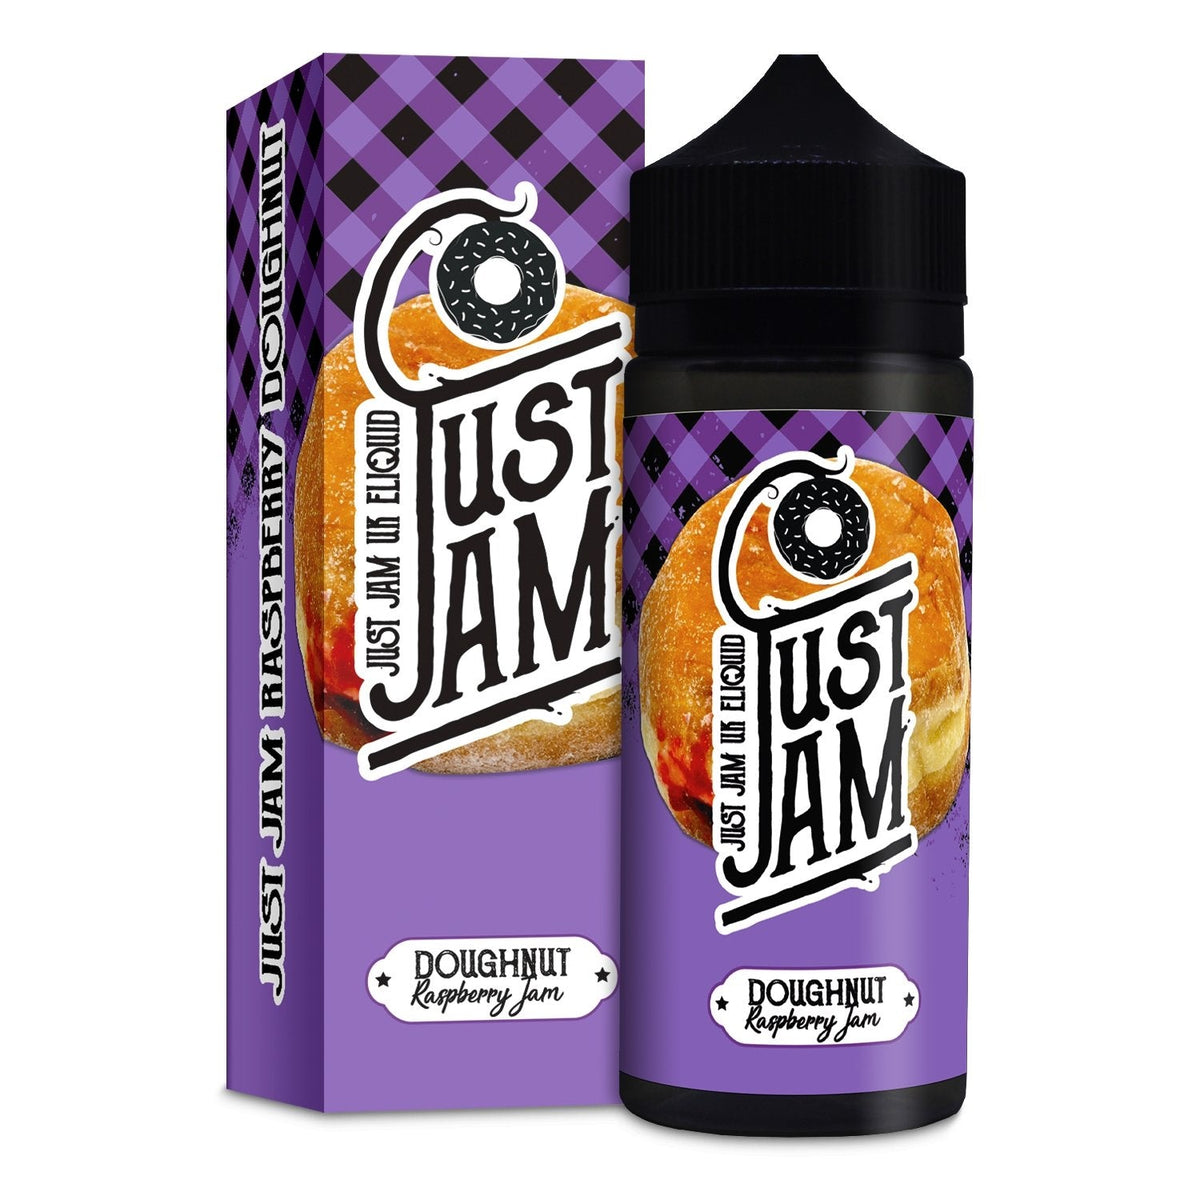 Just Jam Original 100ml Shortfill - Best Vape Wholesale